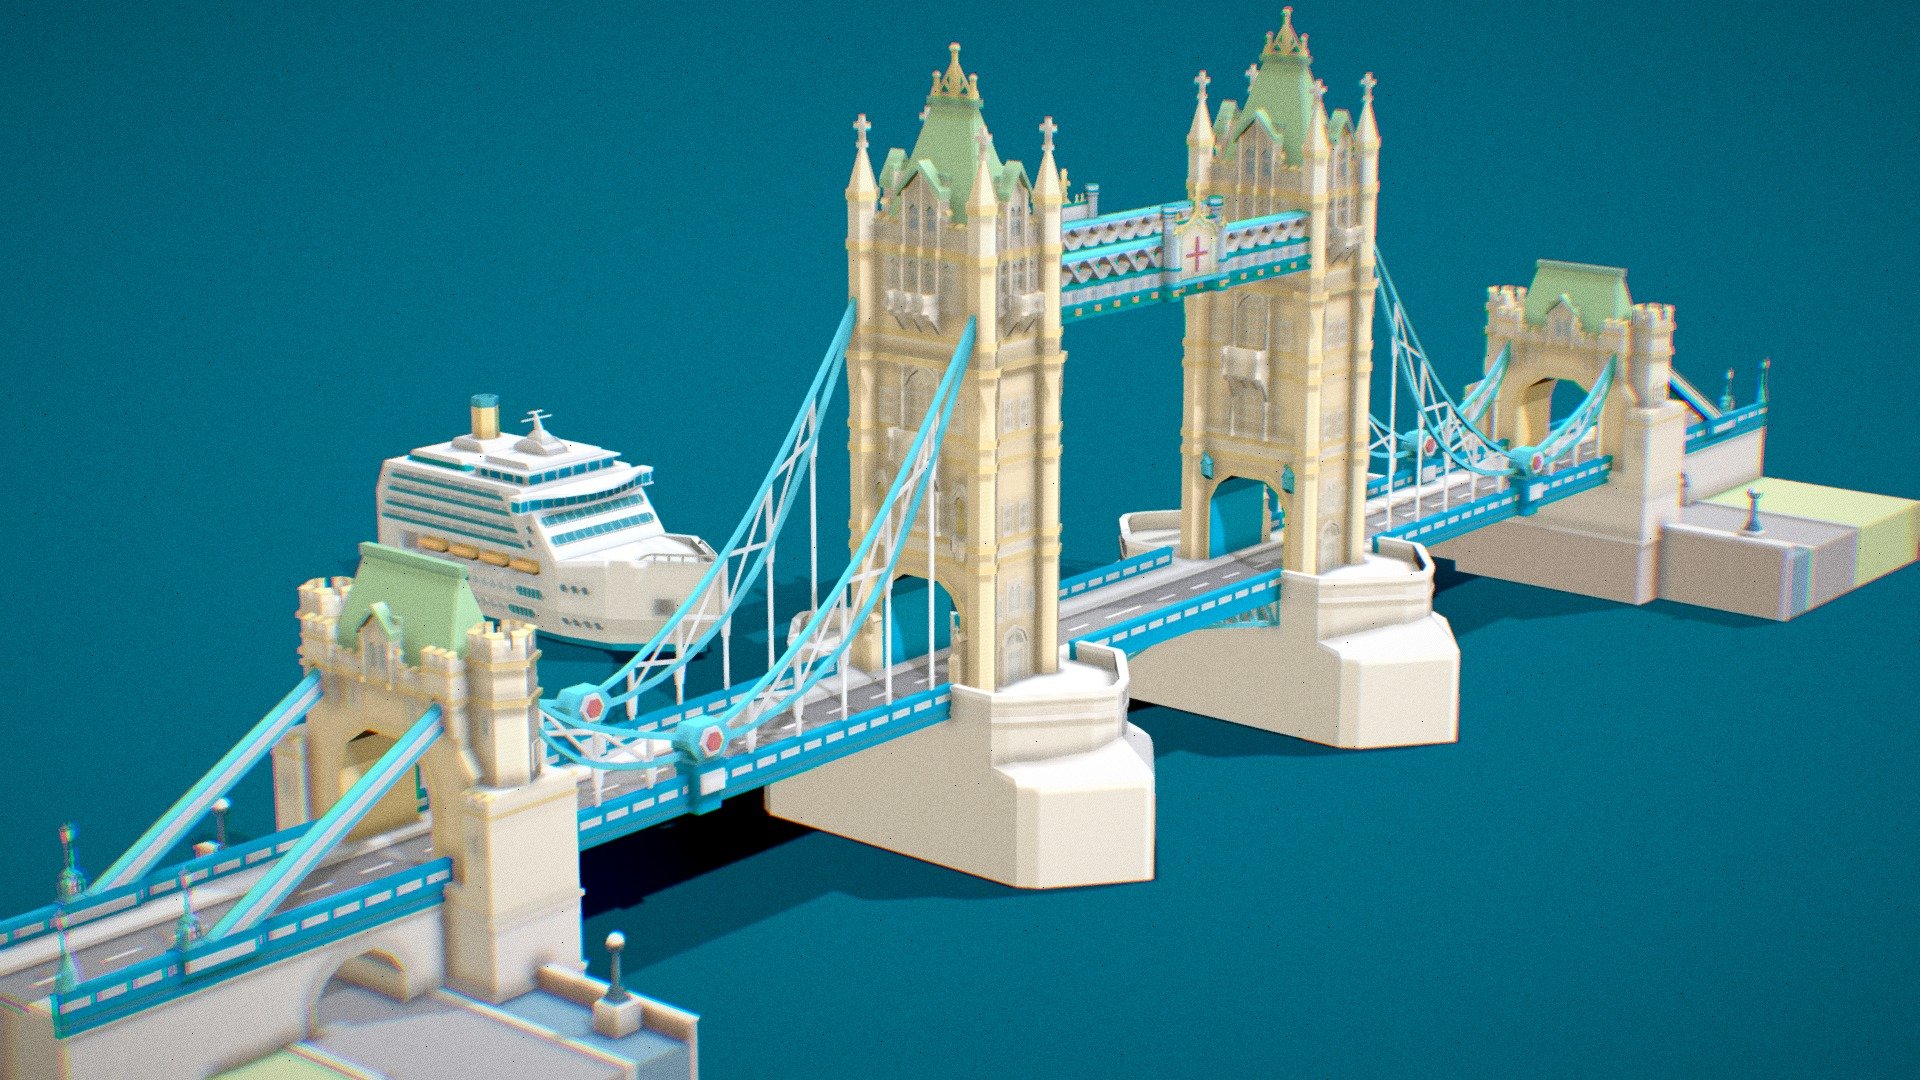 Beautiful London Bridge in low polygon style!




Mobile ready models

Openable gate for cruise ship

Twitter: https://twitter.com/frozenmistdev

Instagram: https://www.instagram.com/frozenmistadventure/

Facebook: https://www.facebook.com/FrozenMistAdventure

Youtube: https://www.youtube.com/channel/UC1ADZ8xSCKDDizmStC5vkow

Other Unity3D Assets: https://forum.unity.com/threads/953333/

Home page: https://www.frozenmist.com/ - FM Polygon UK Tower Bridge - Buy Royalty Free 3D model by FrozenMistDev 3d model